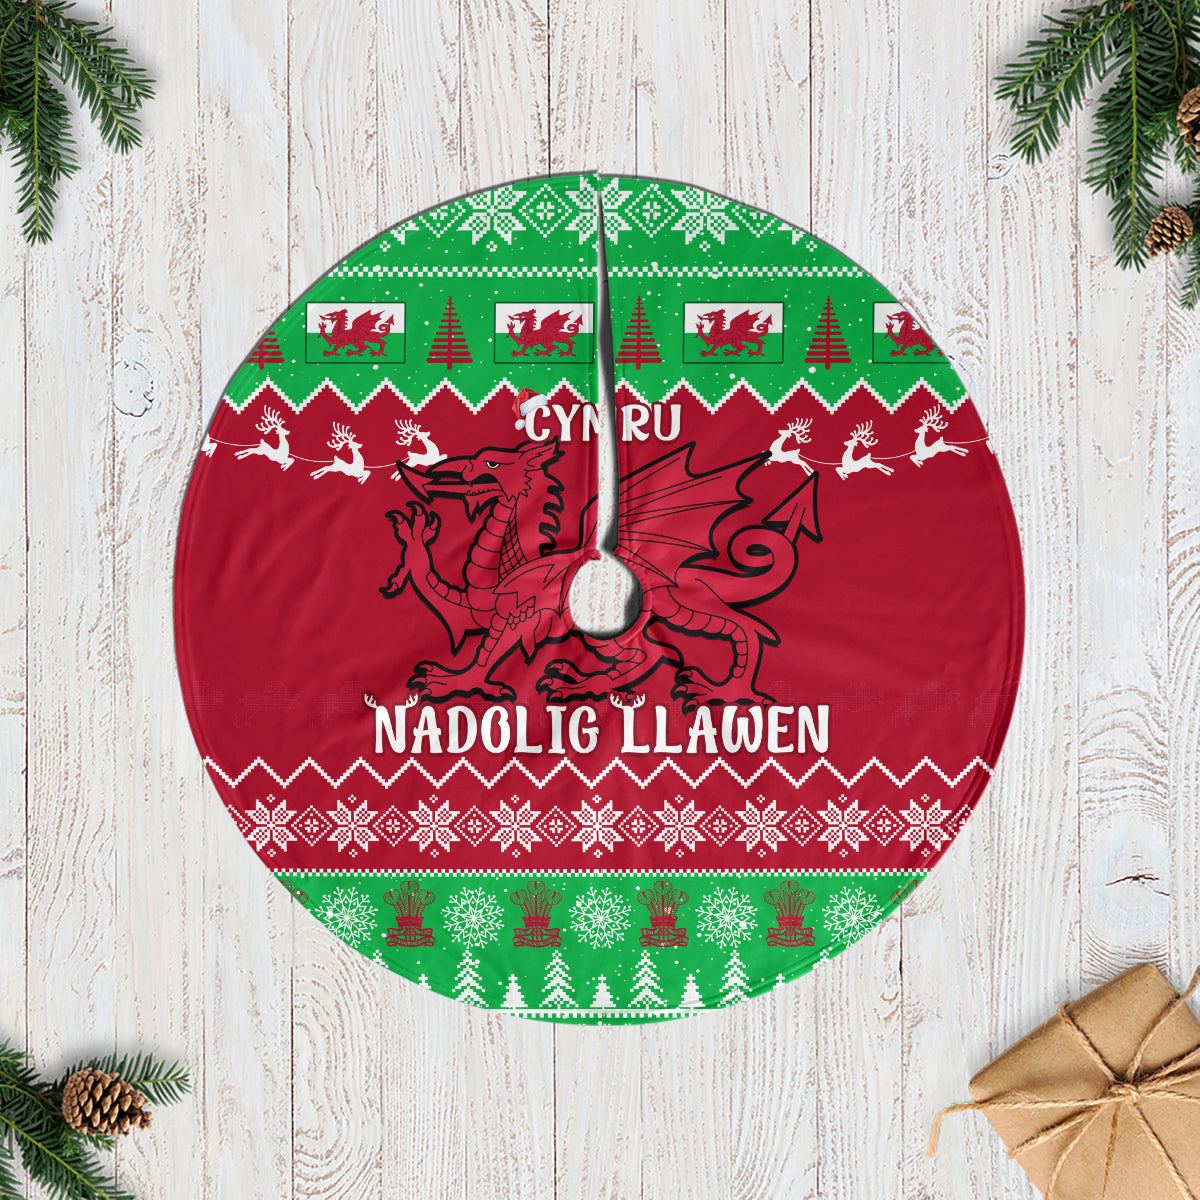 wales-christmas-tree-skirt-nadolig-llawen-cymru-unique-version